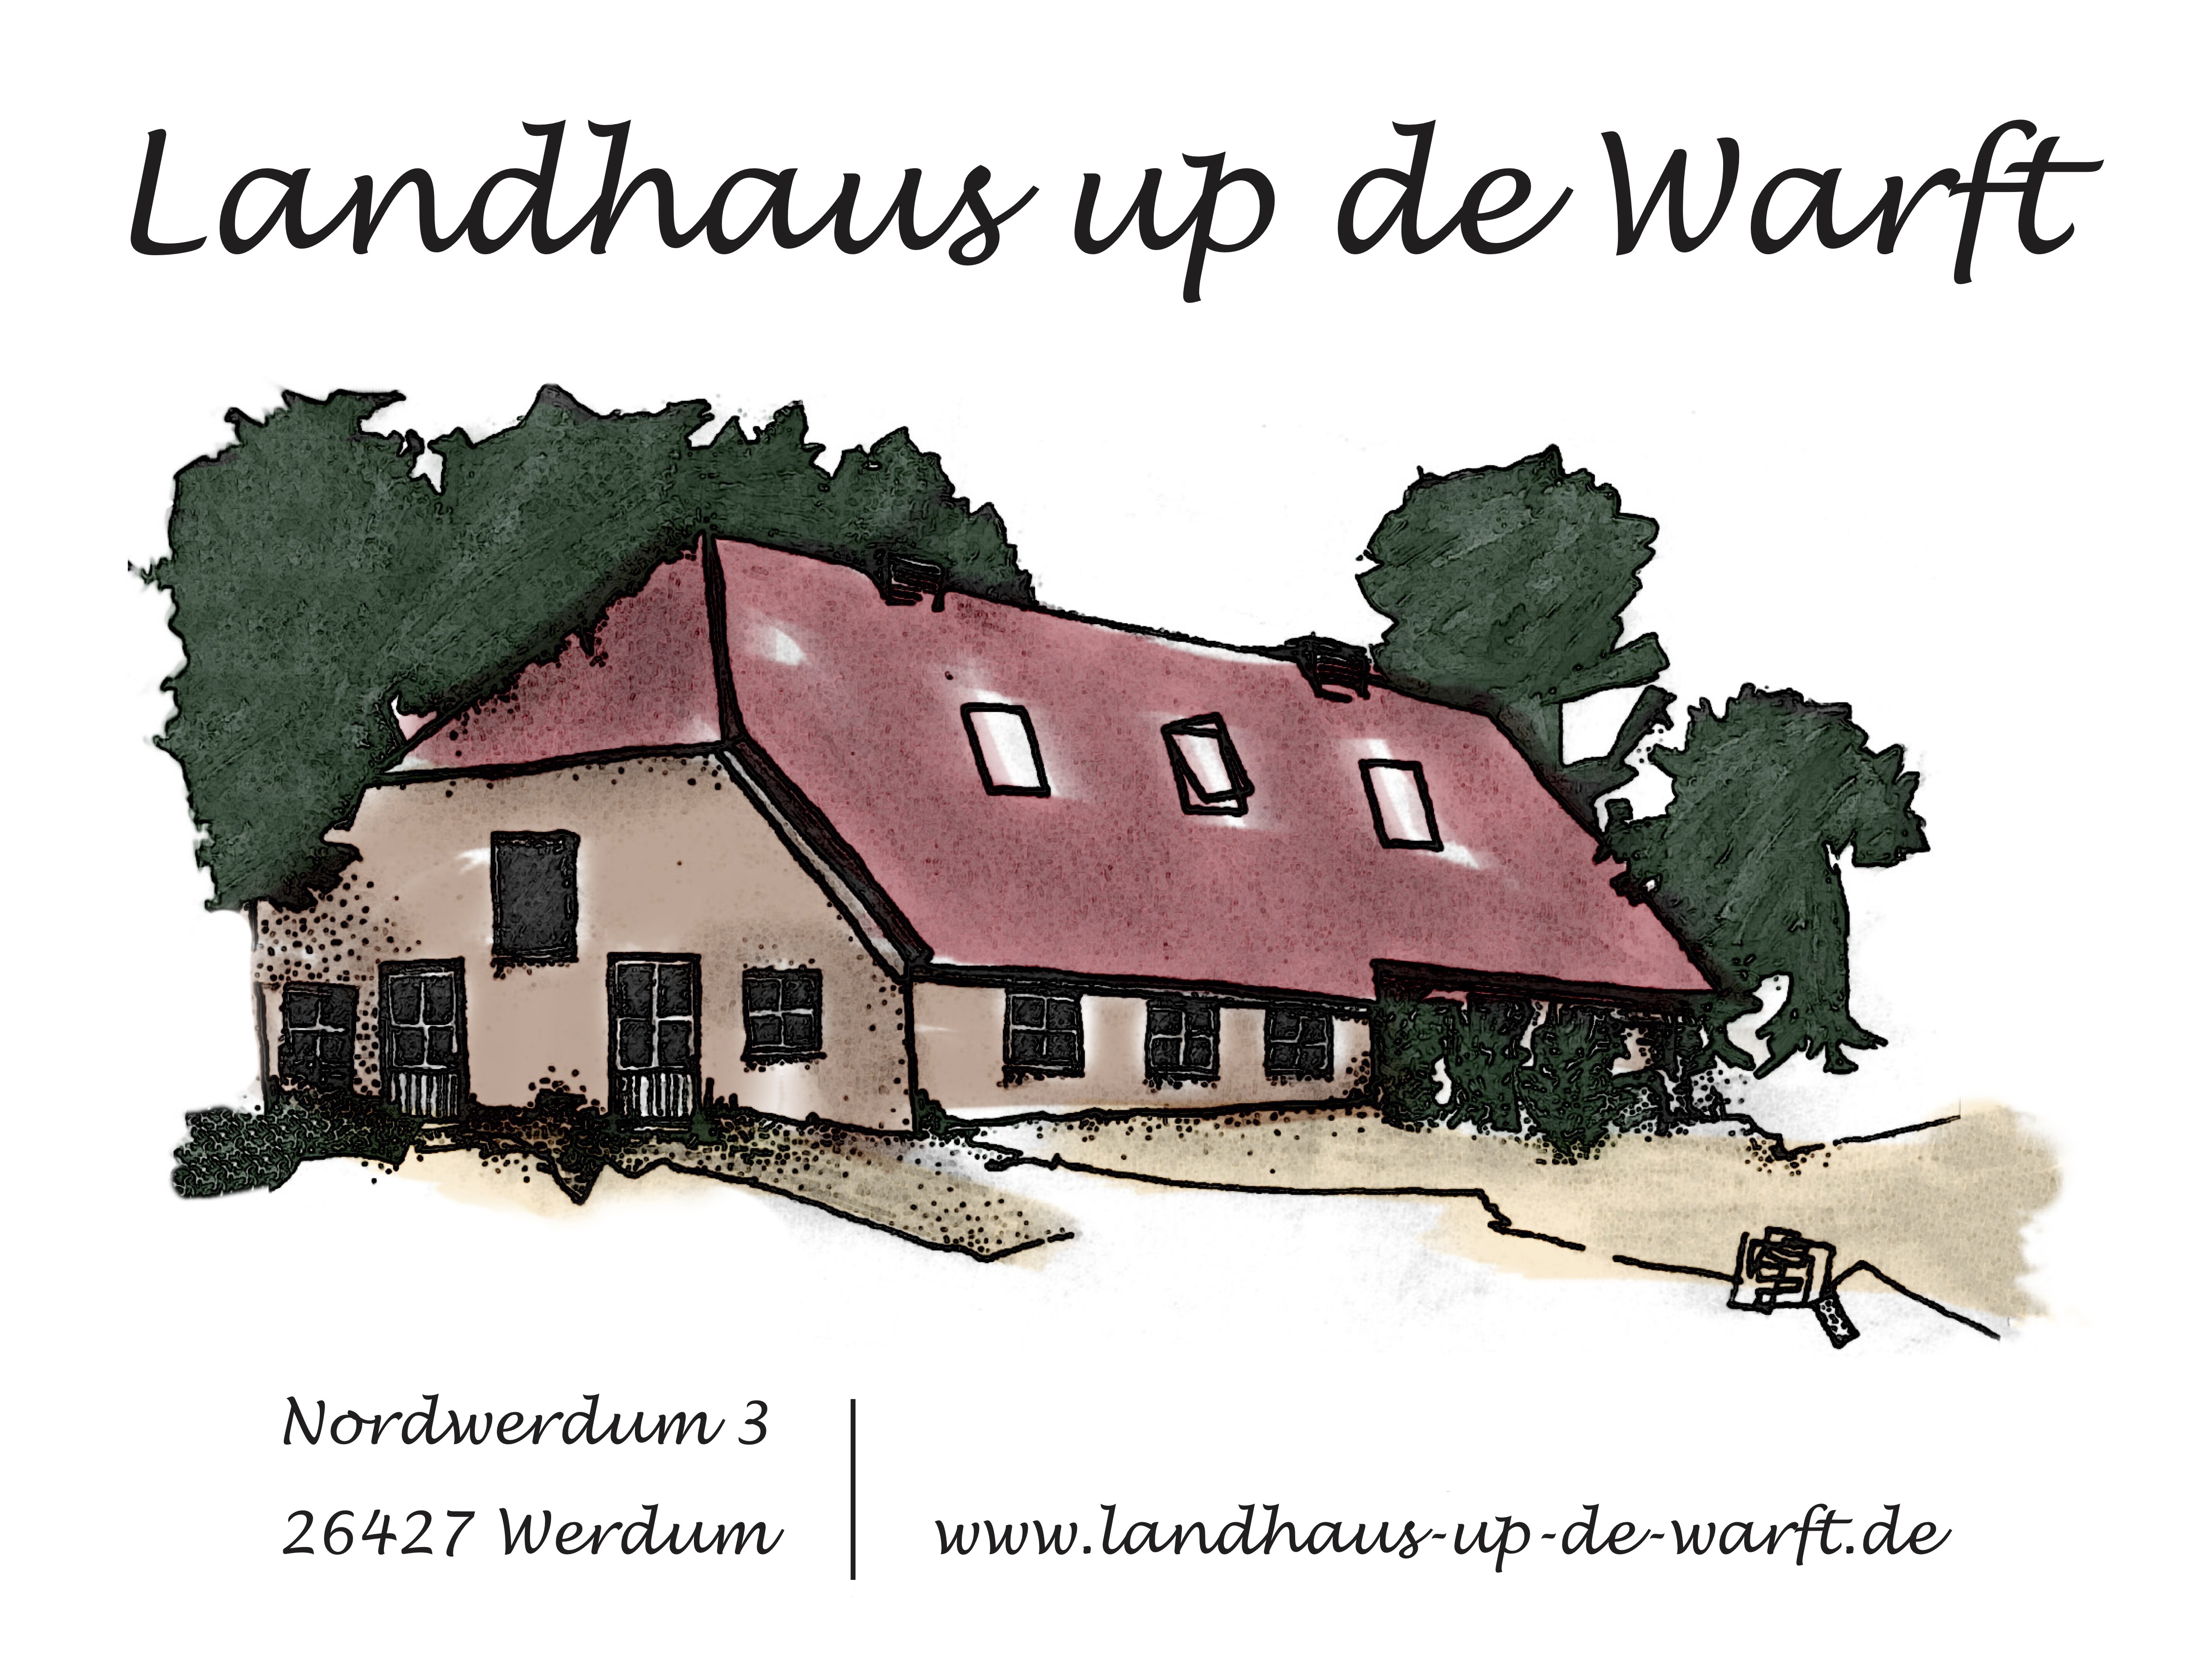 (c) Landhaus-up-de-warft.de